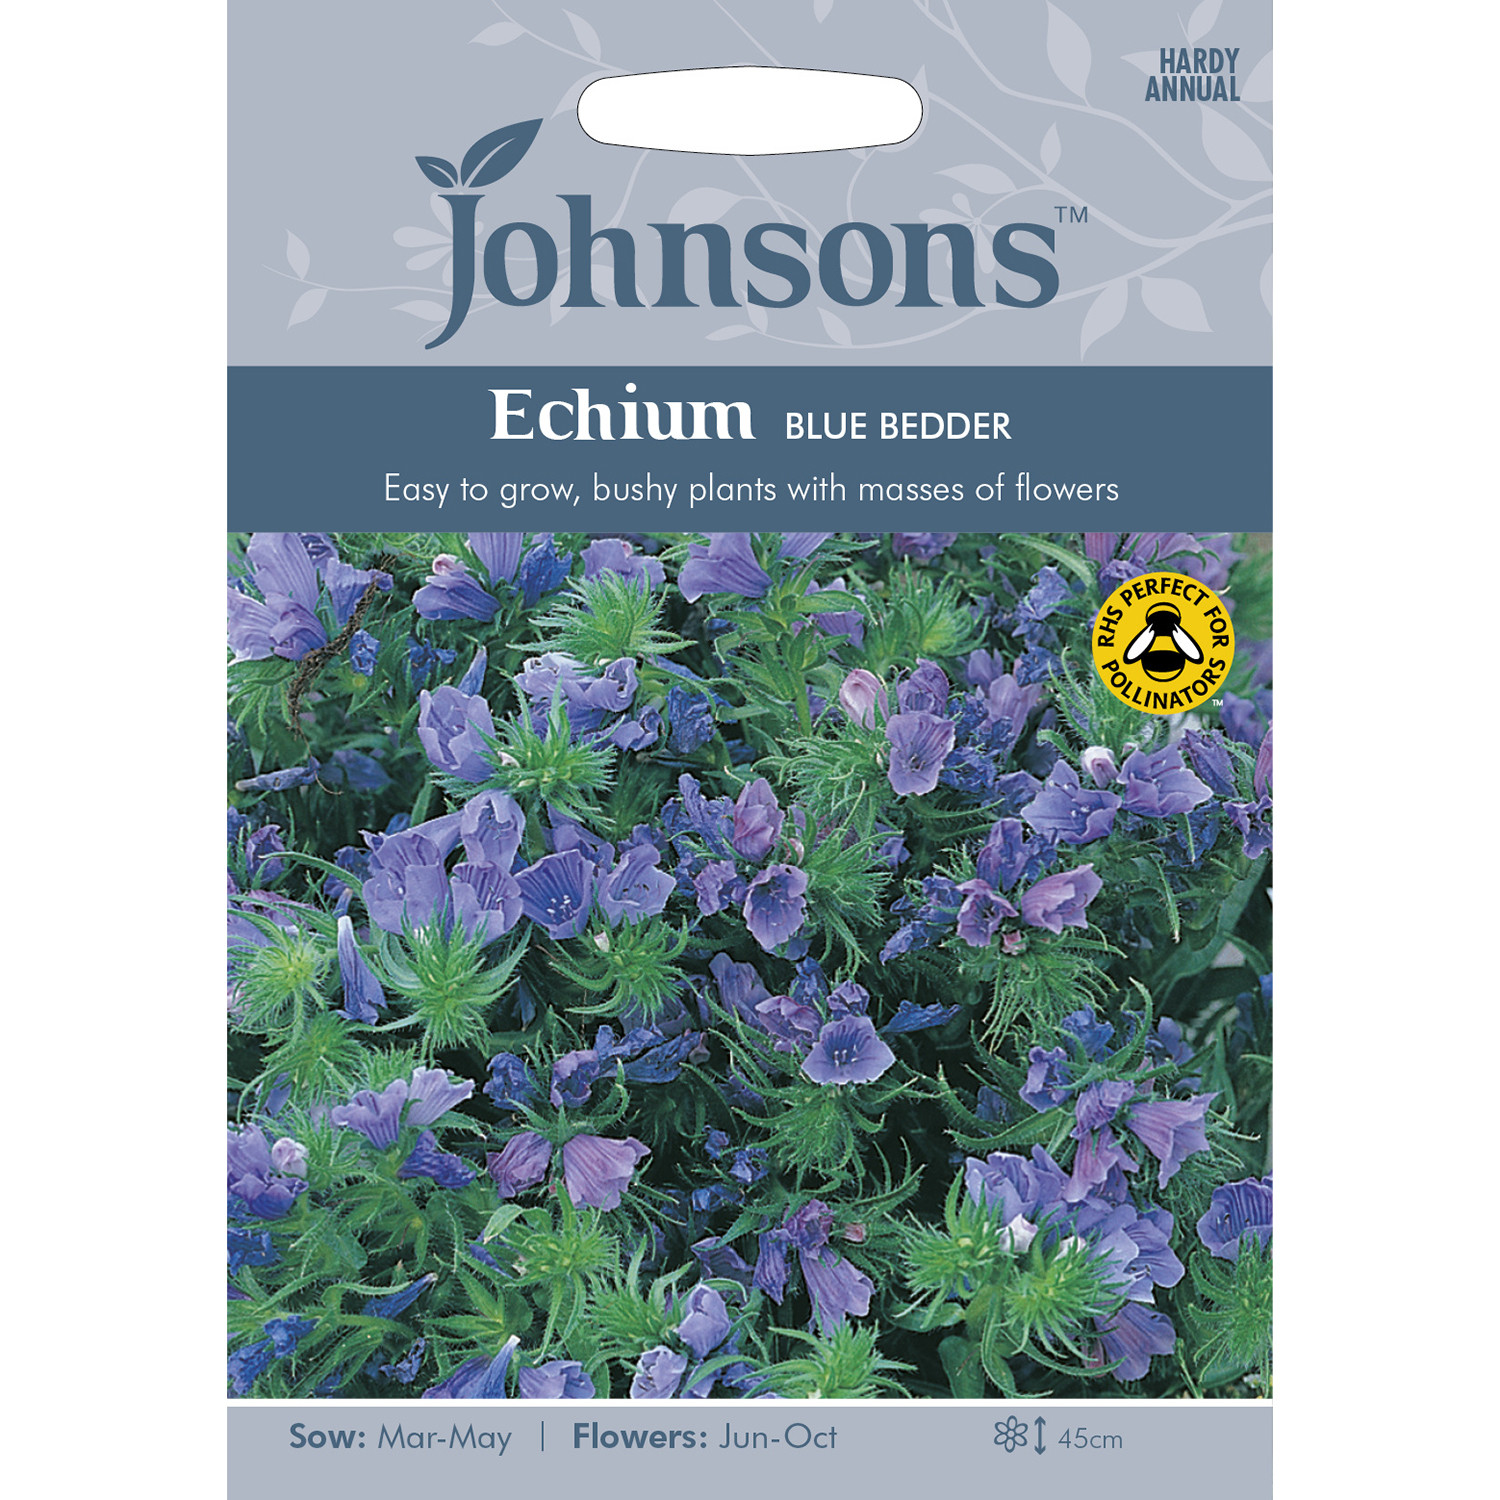 Johnsons Echium Blue Bedder Flower Seeds Image 2